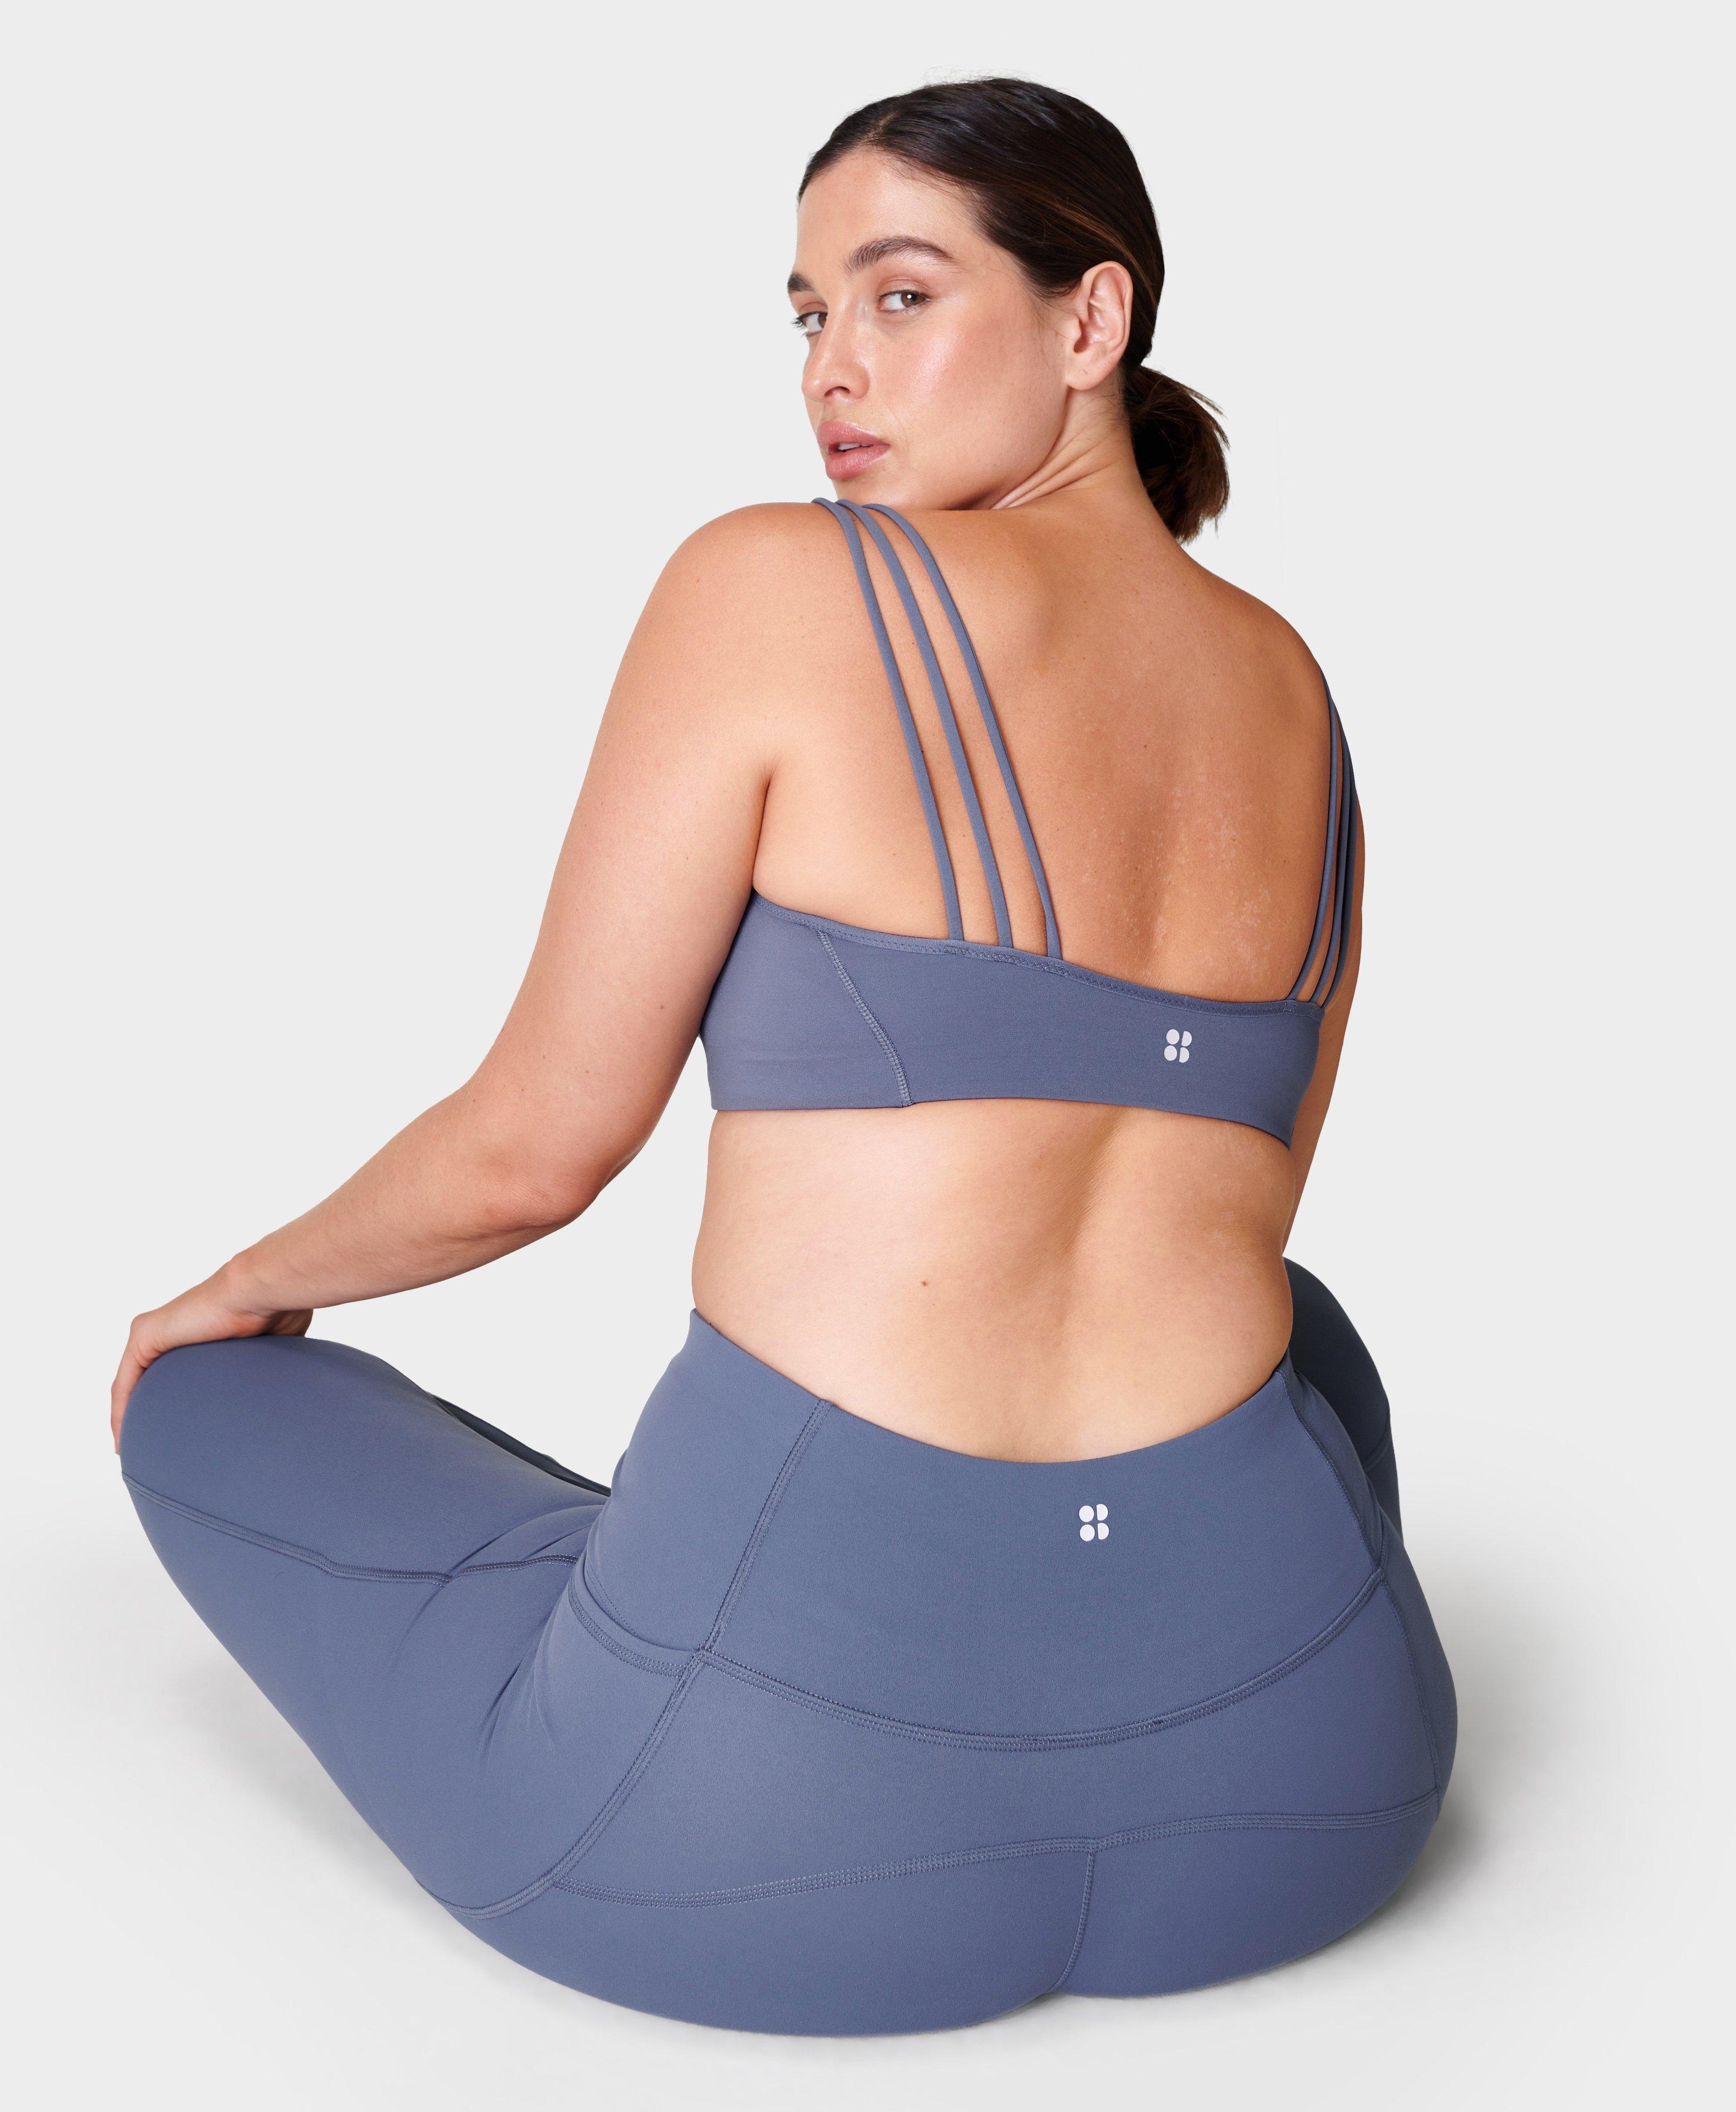 original Ahh Bra comfort soft Fitness bra yoga tops as seen on TV